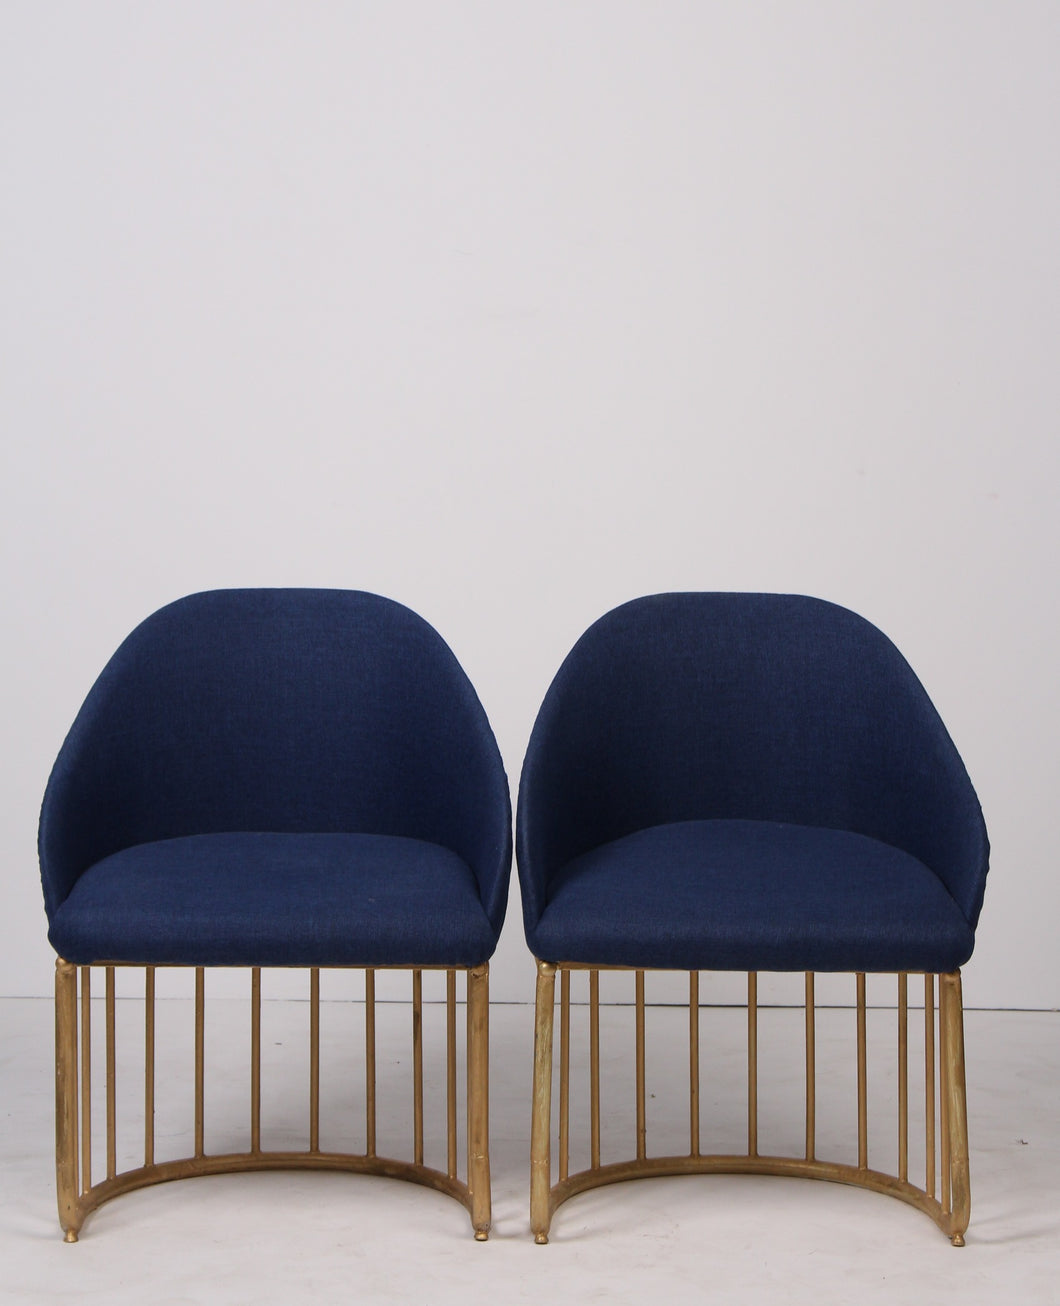 Set of 2 deep blue & golden modern chairs 2' x 3'ft - GS Productions